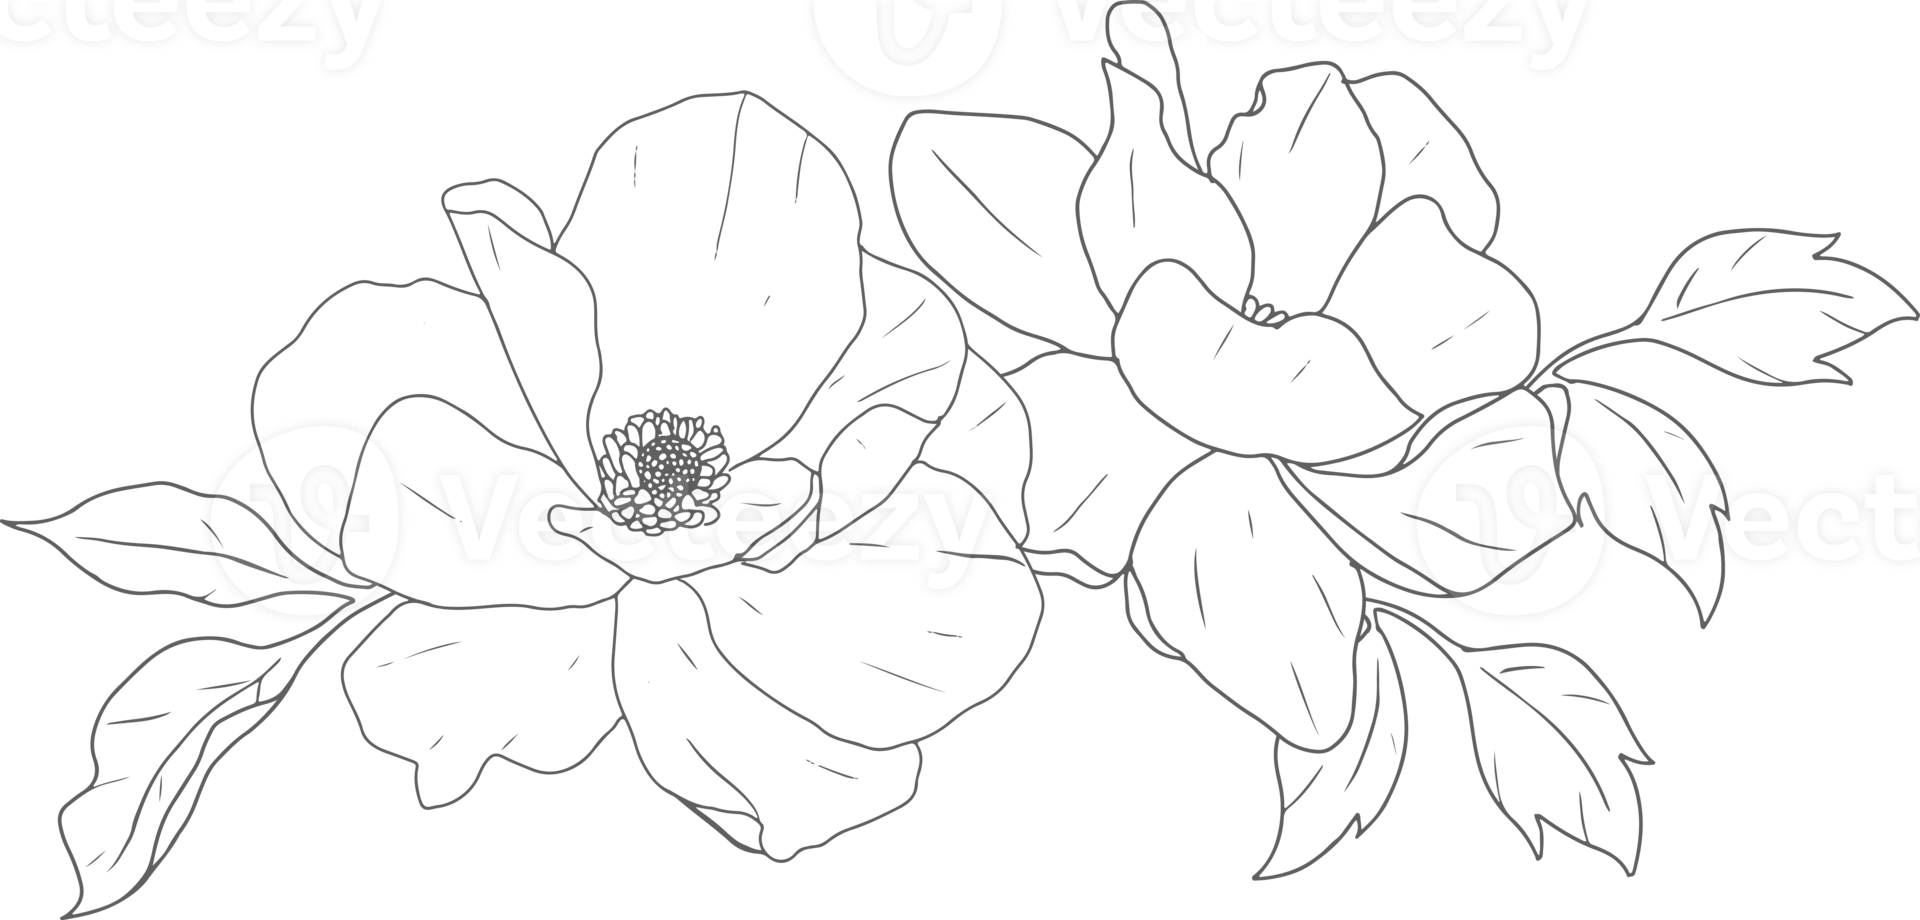 doodle line art elementos de ramo de flores de peonía png